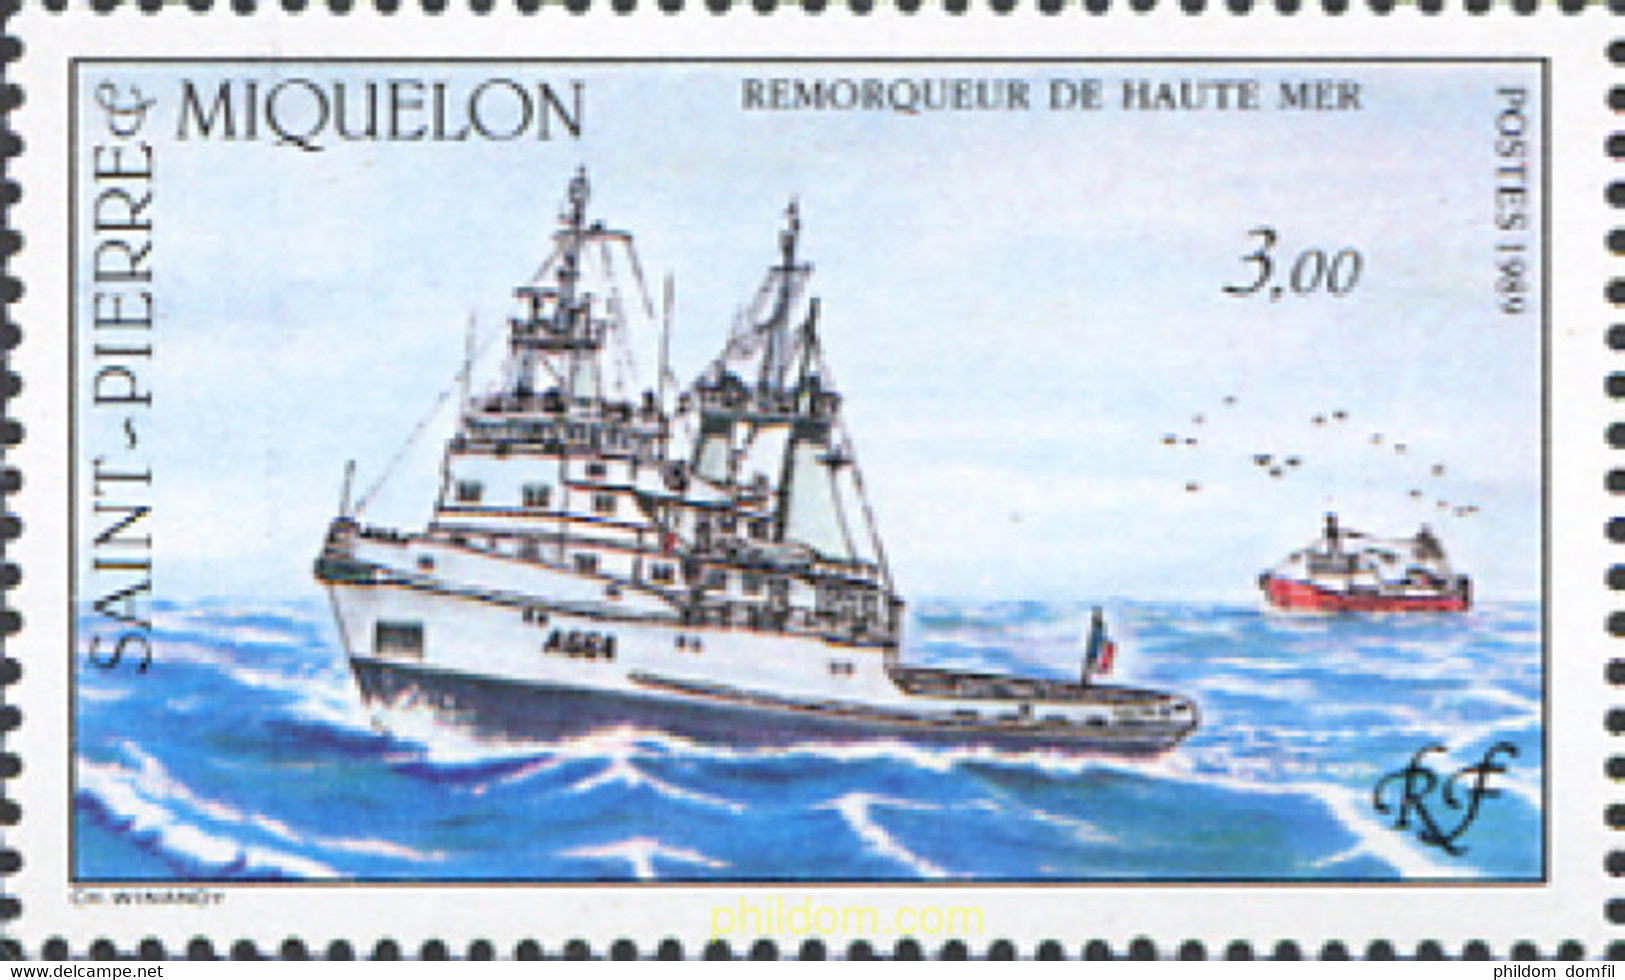 161378 MNH SAN PEDRO Y MIQUELON 1989 FLOTA DE SAN PEDRO Y MIQUELON - Used Stamps